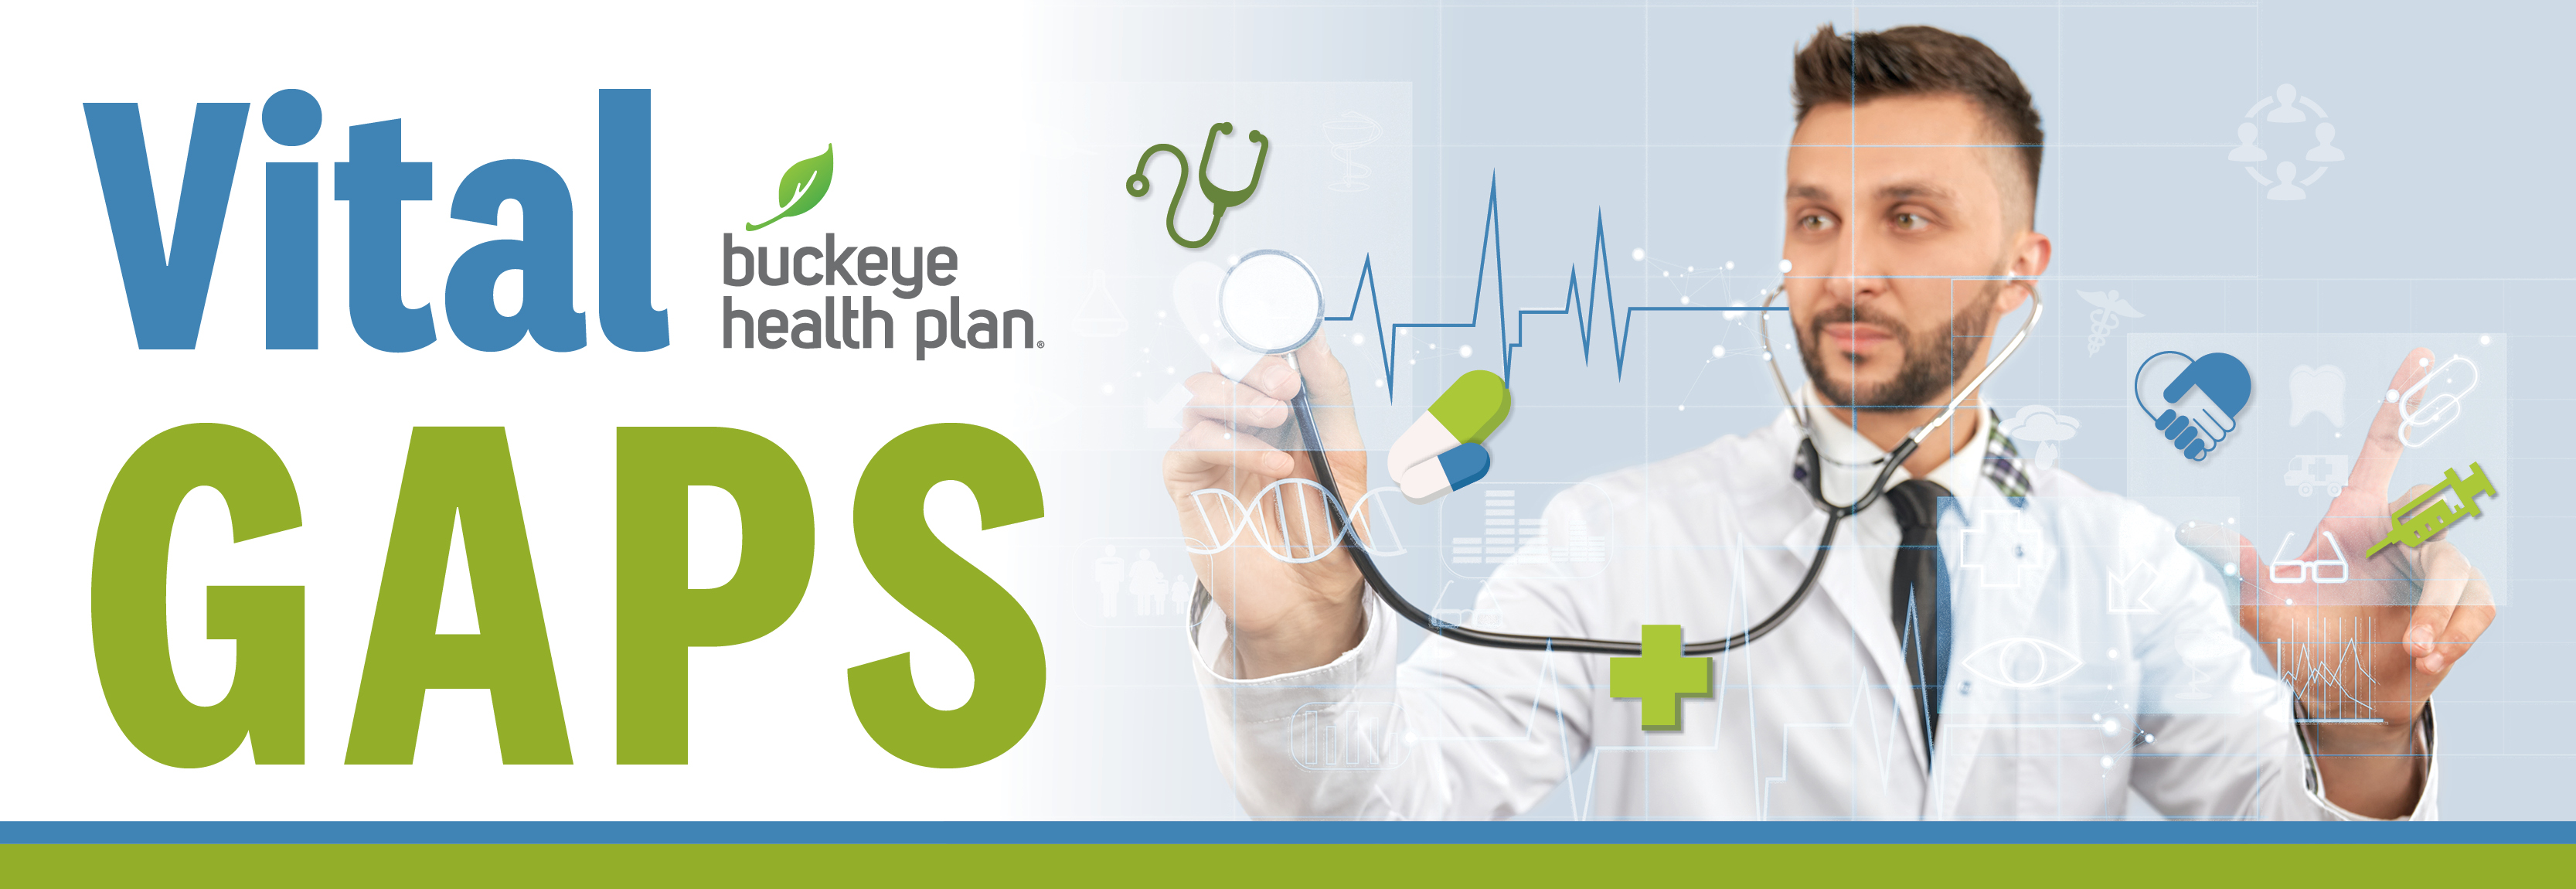 Vital GAPS Buckeye Health Plan image of dr with stethoscope